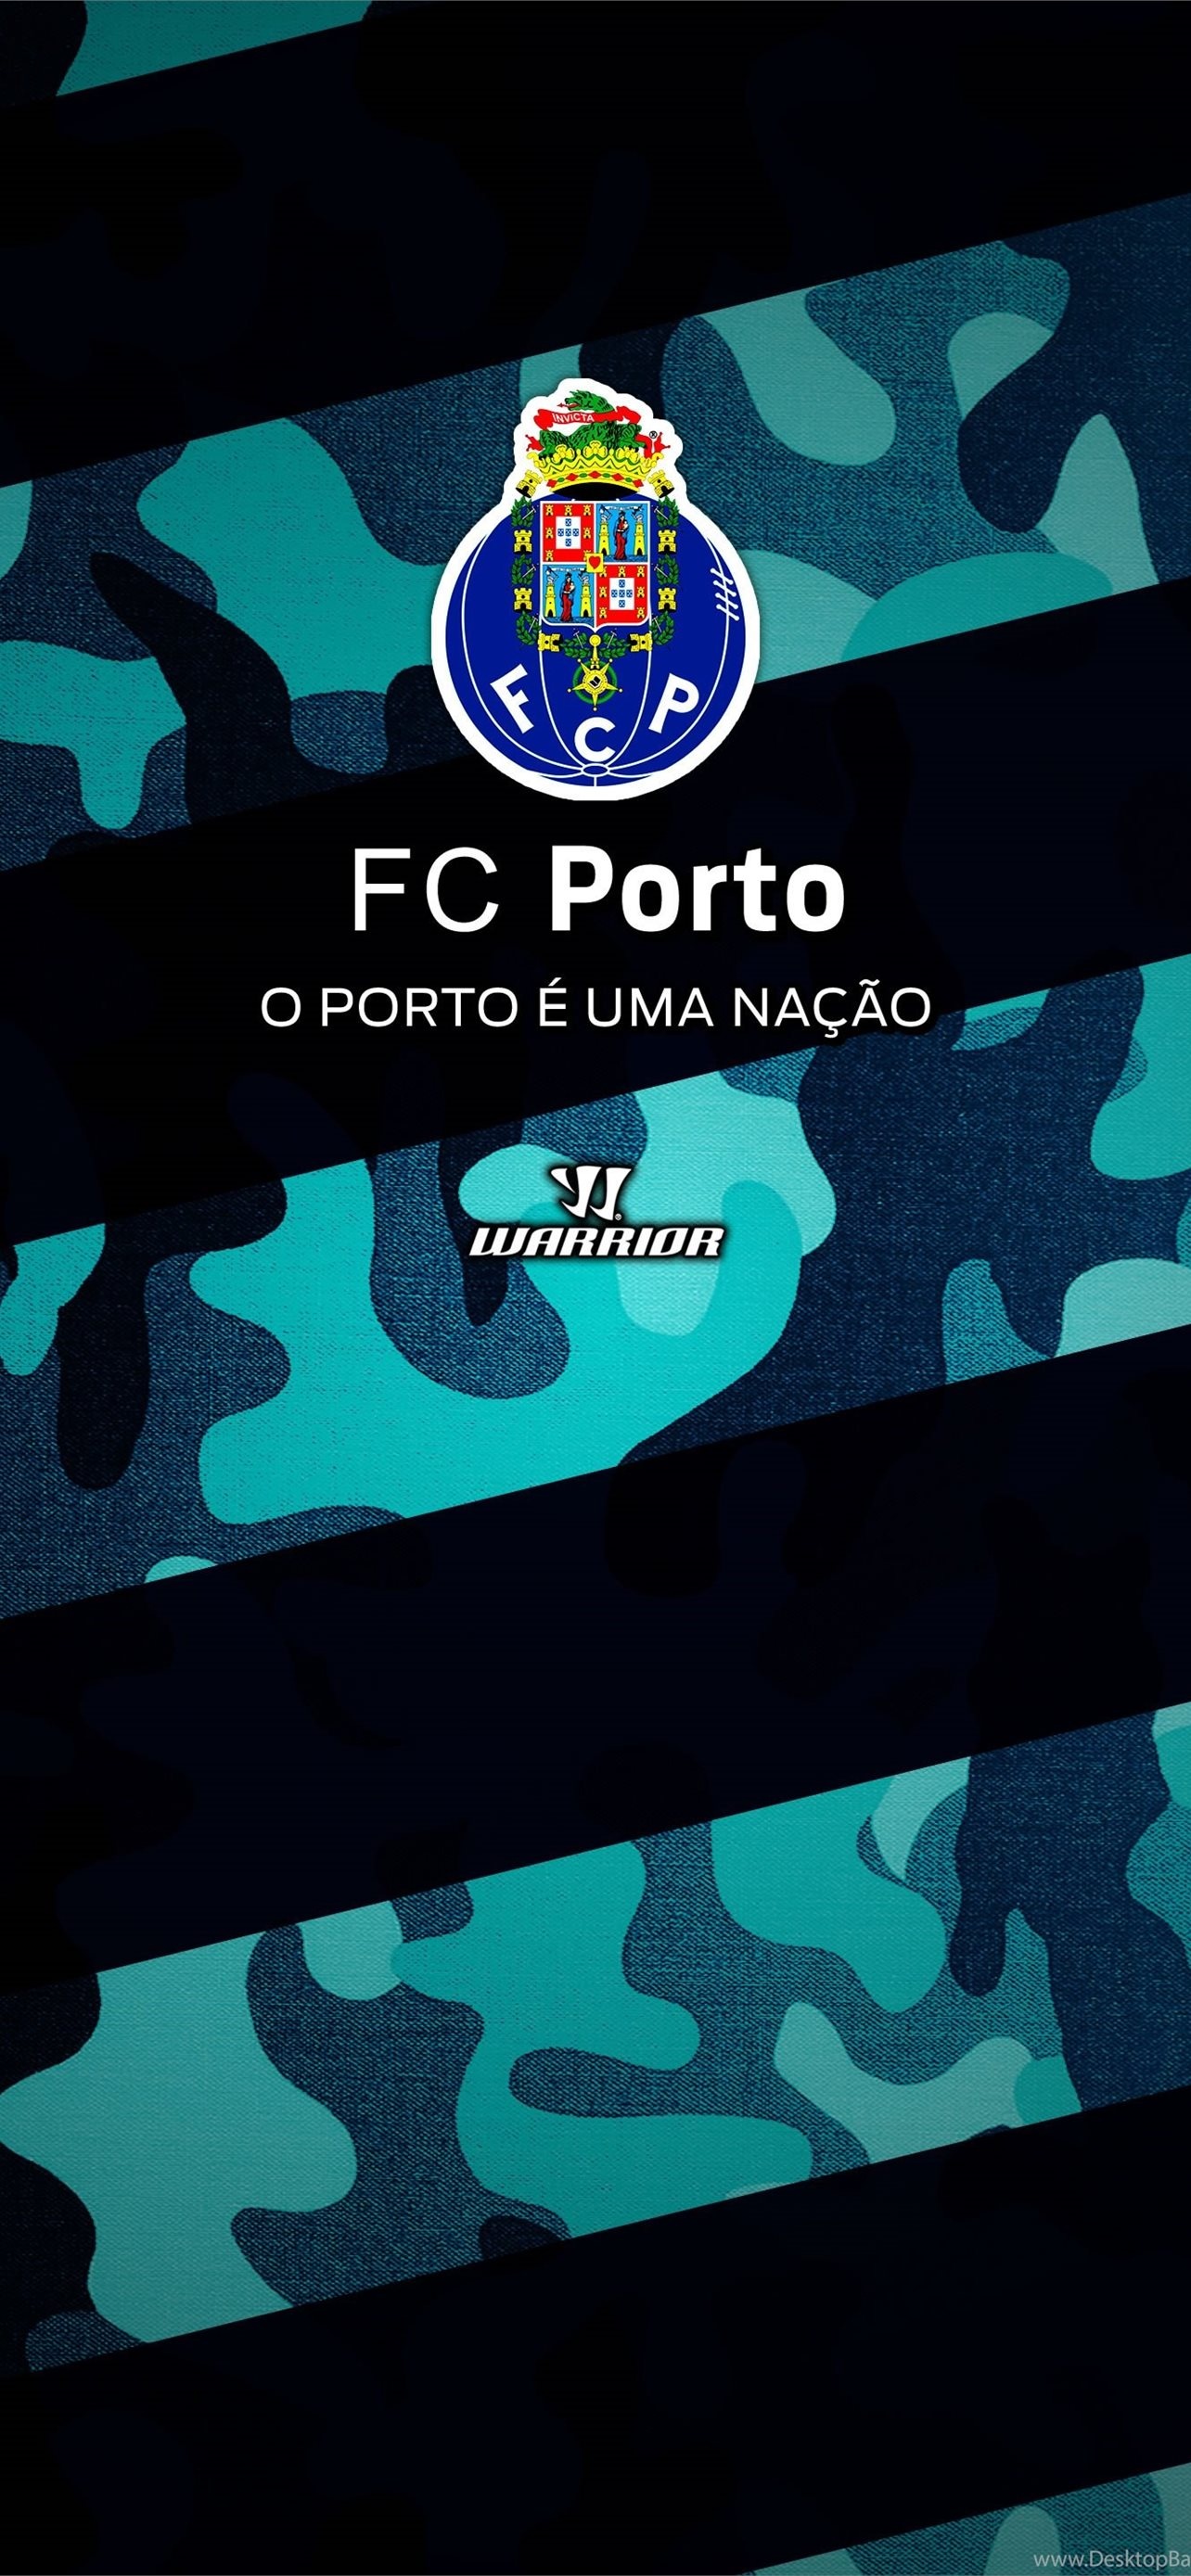 FC Porto: A Portuguese soccer club that plays in the Primeira Liga, the top division of Portuguese soccer. 1290x2780 HD Wallpaper.